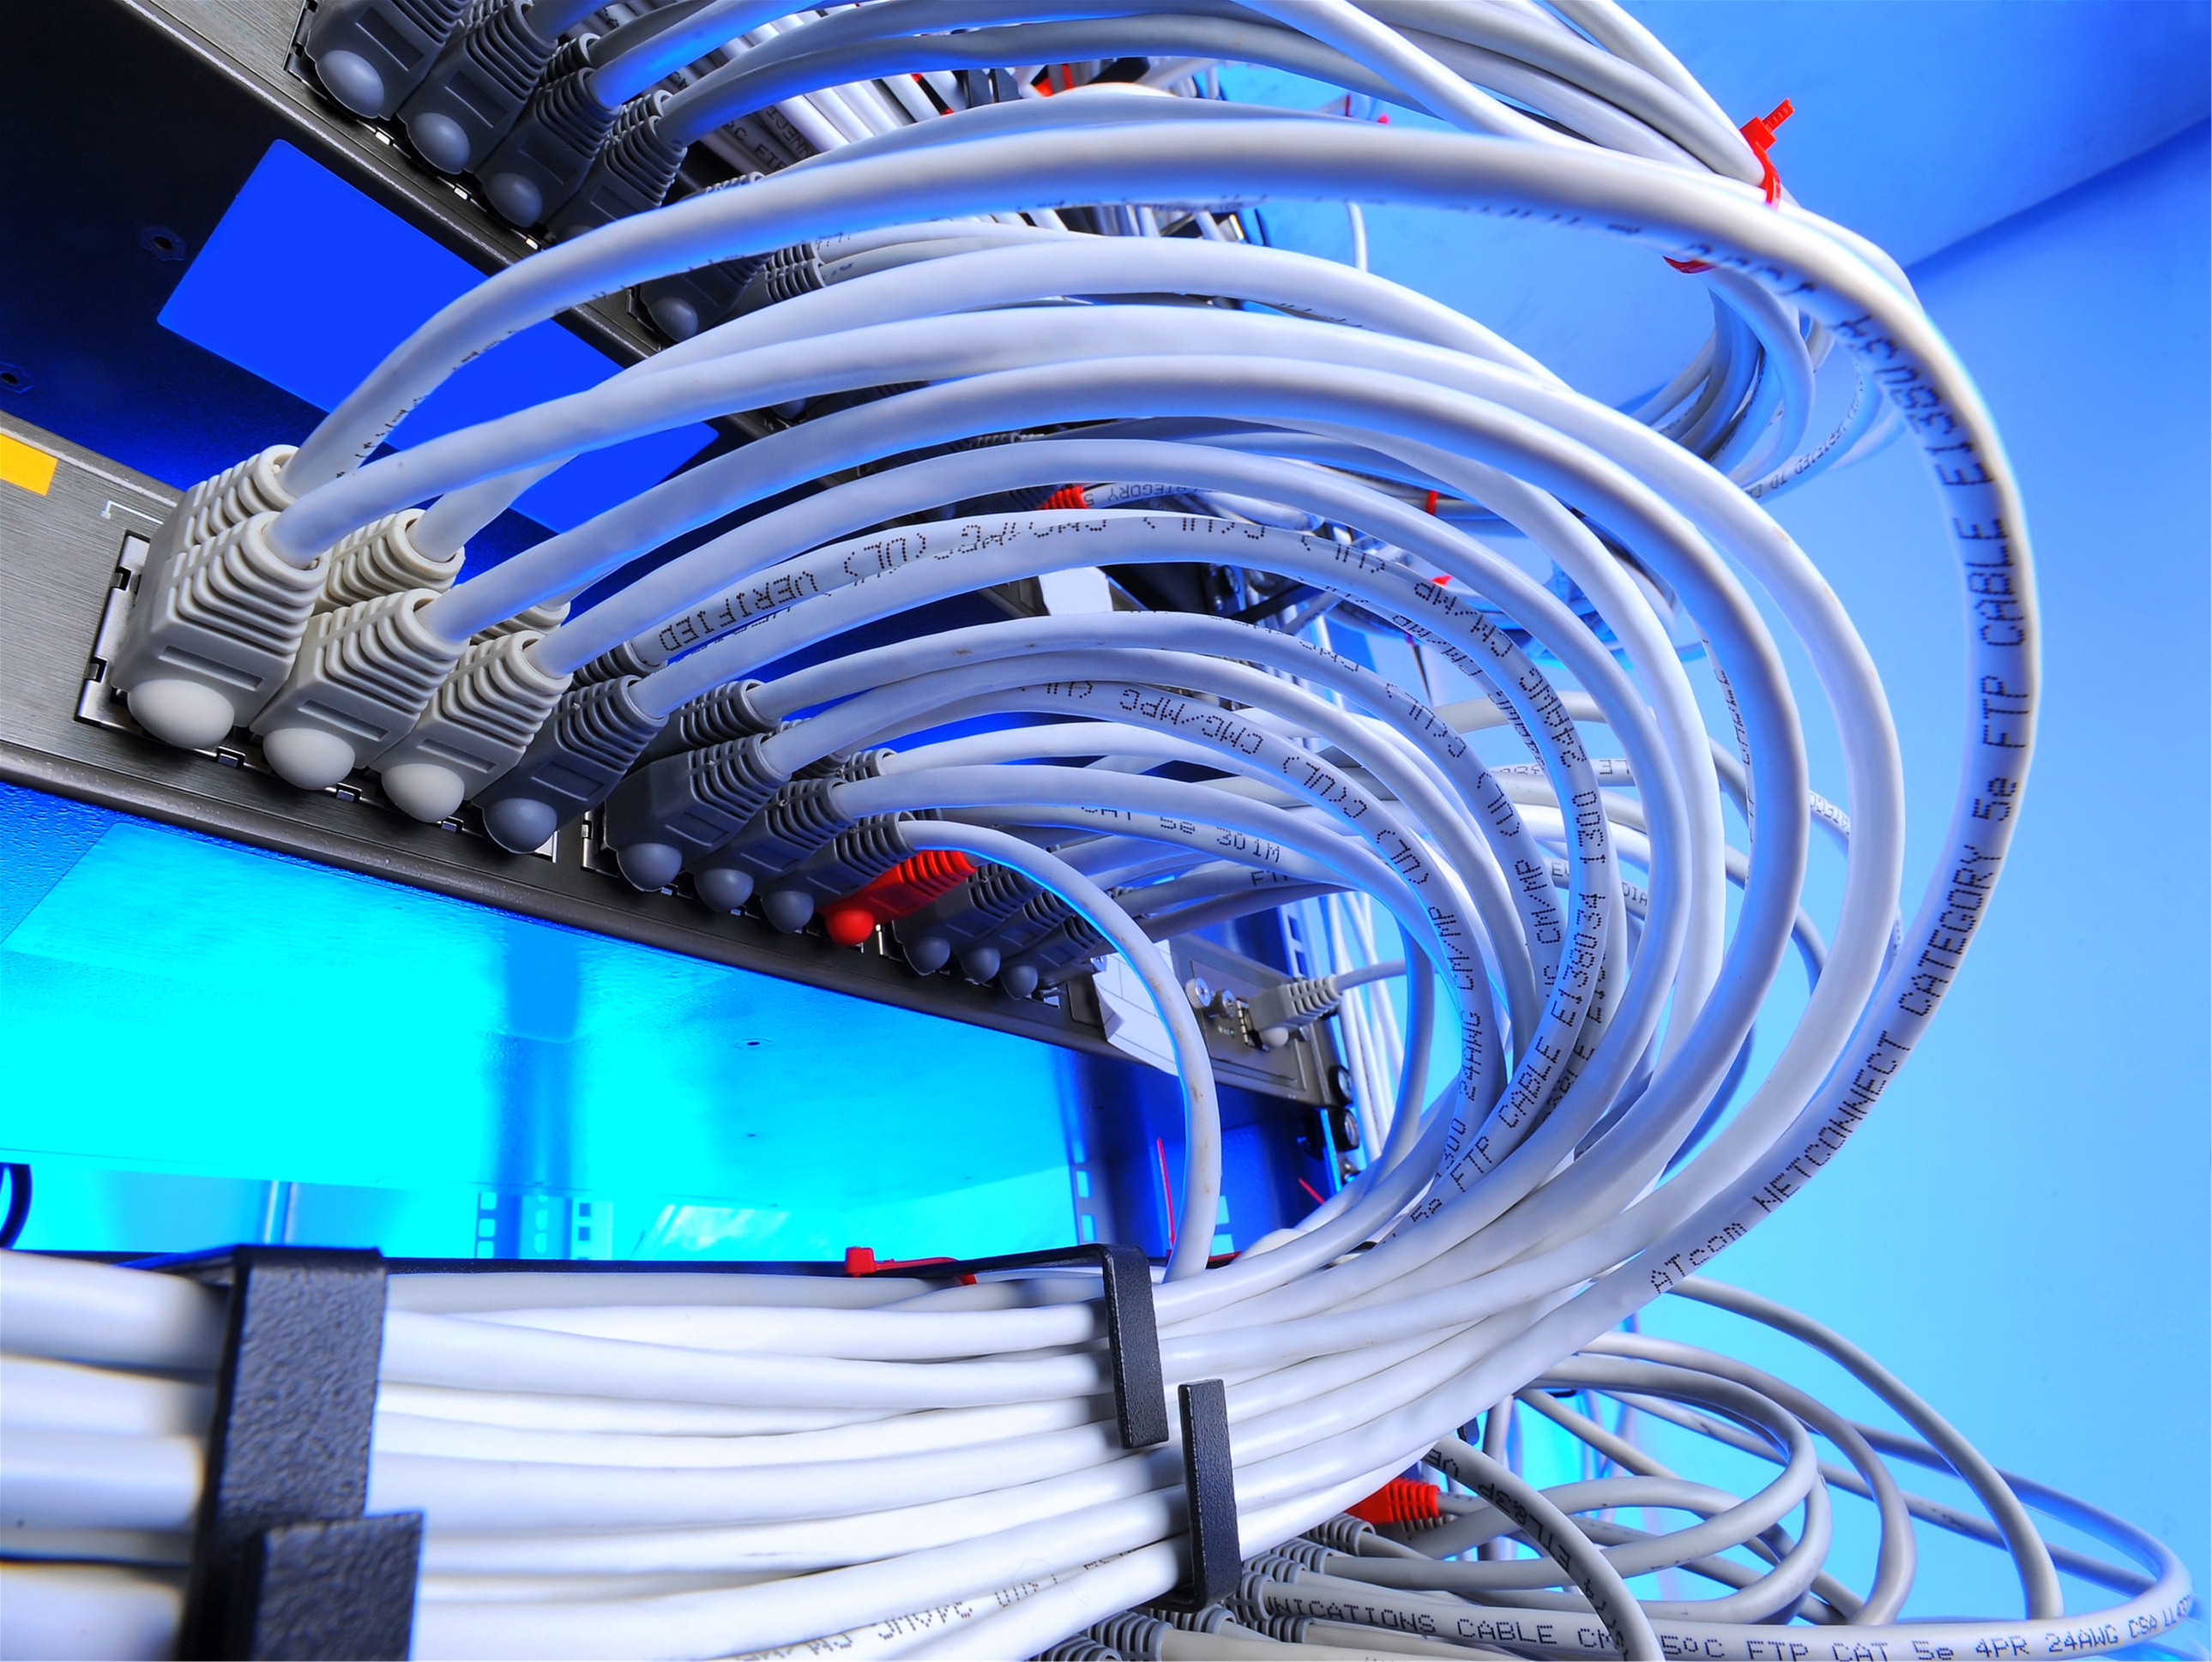 Understanding Fiber Optic Cable Bend Radius and Attenuation